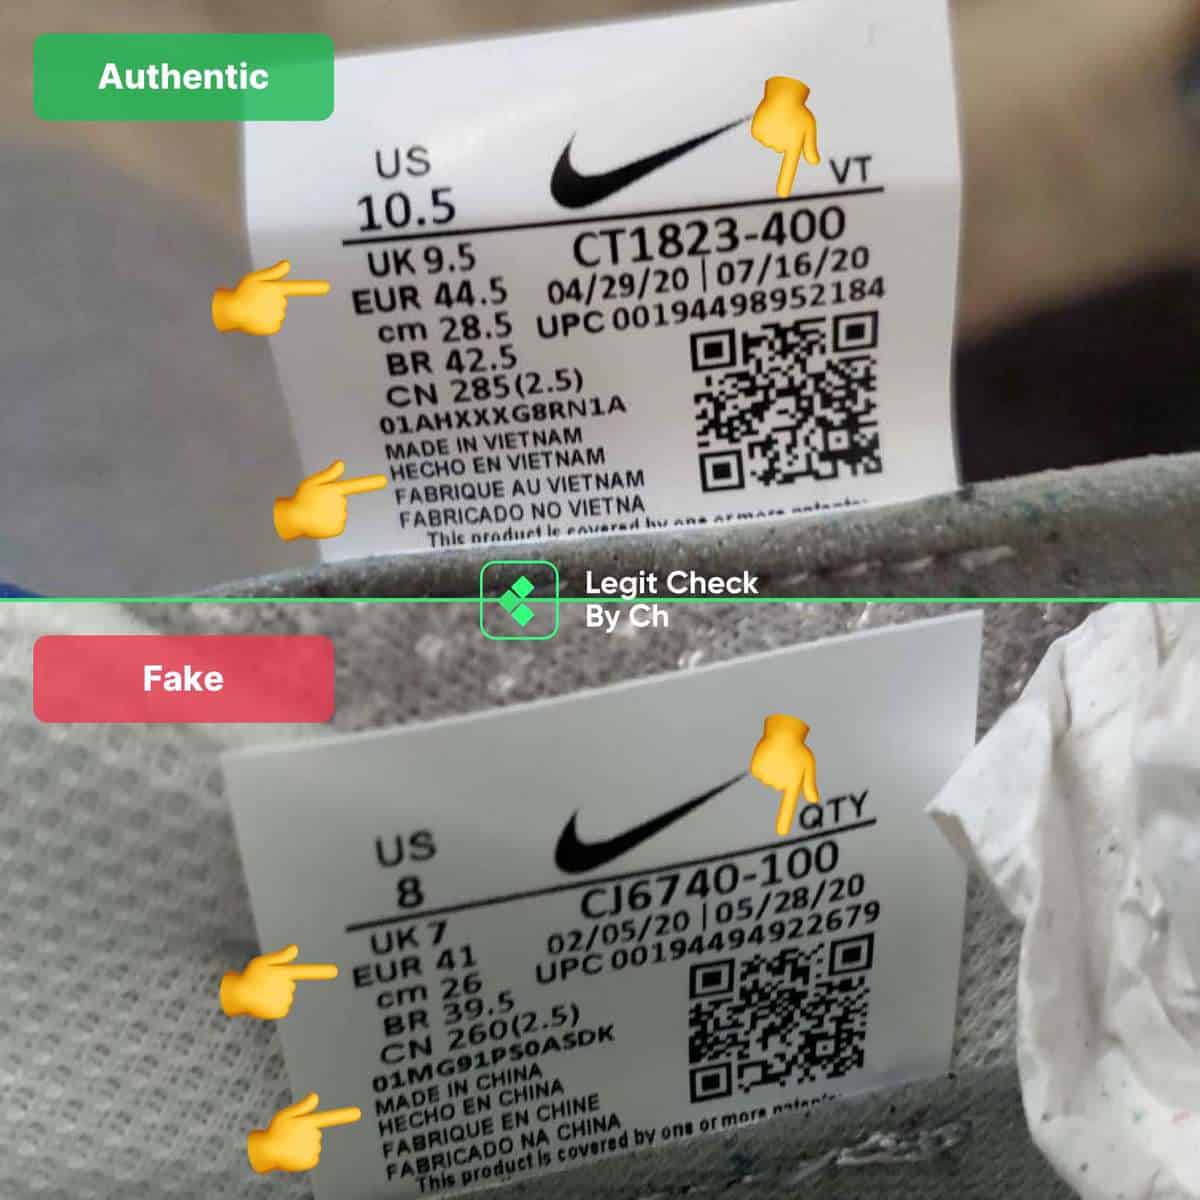 Nike Air VaporMax Fake Vs Real Guide - How To Spot Any Fake Nike ...